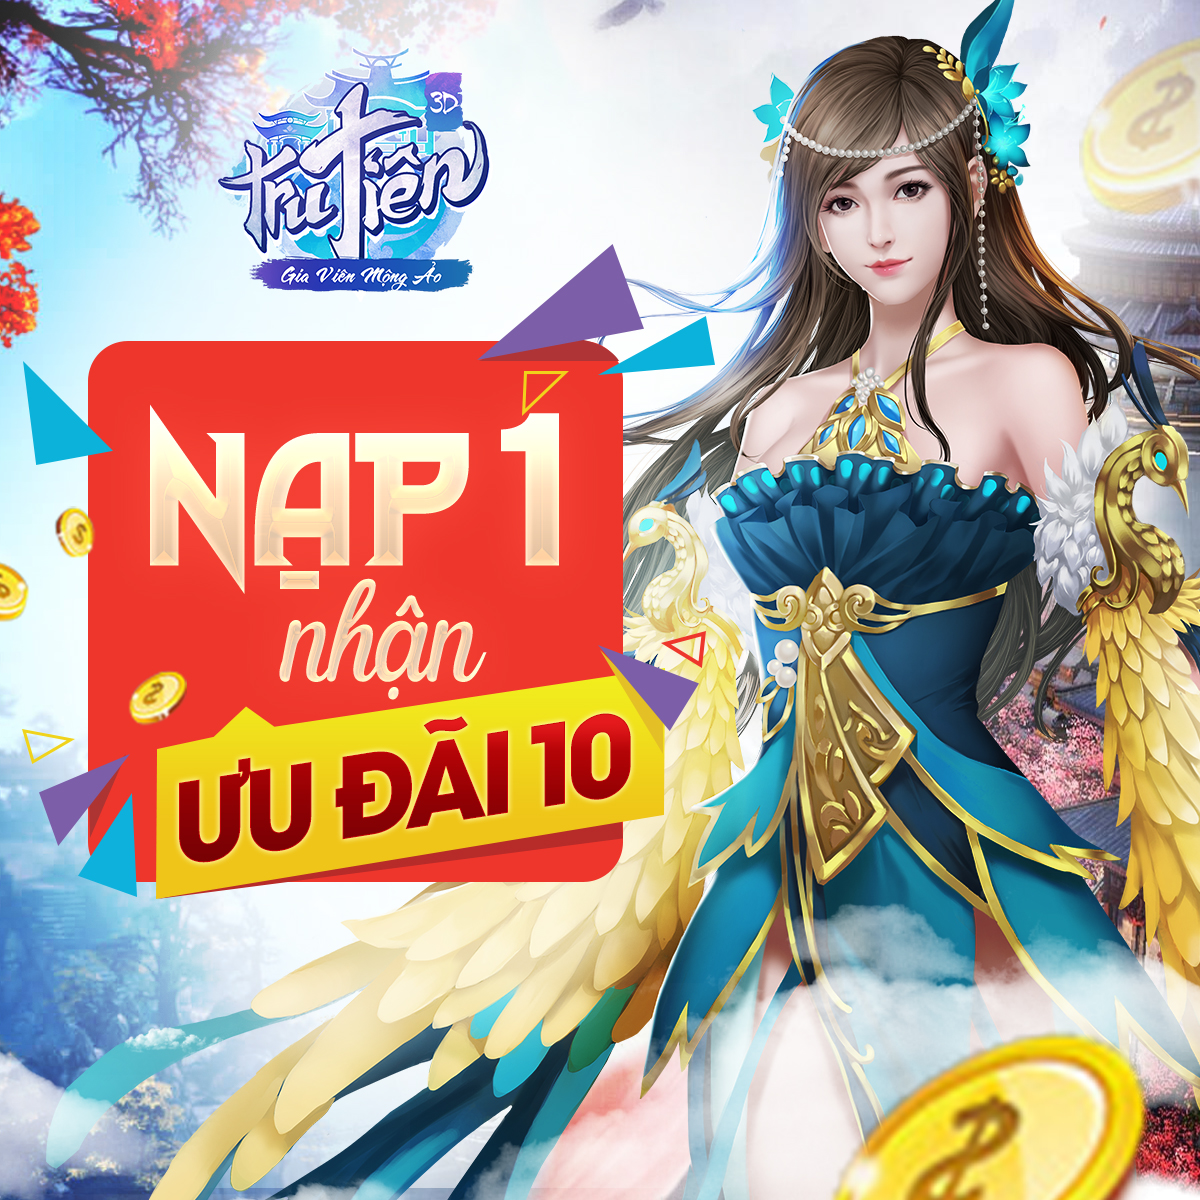 nap-1-nhan-uu-dai-10-1200x1200